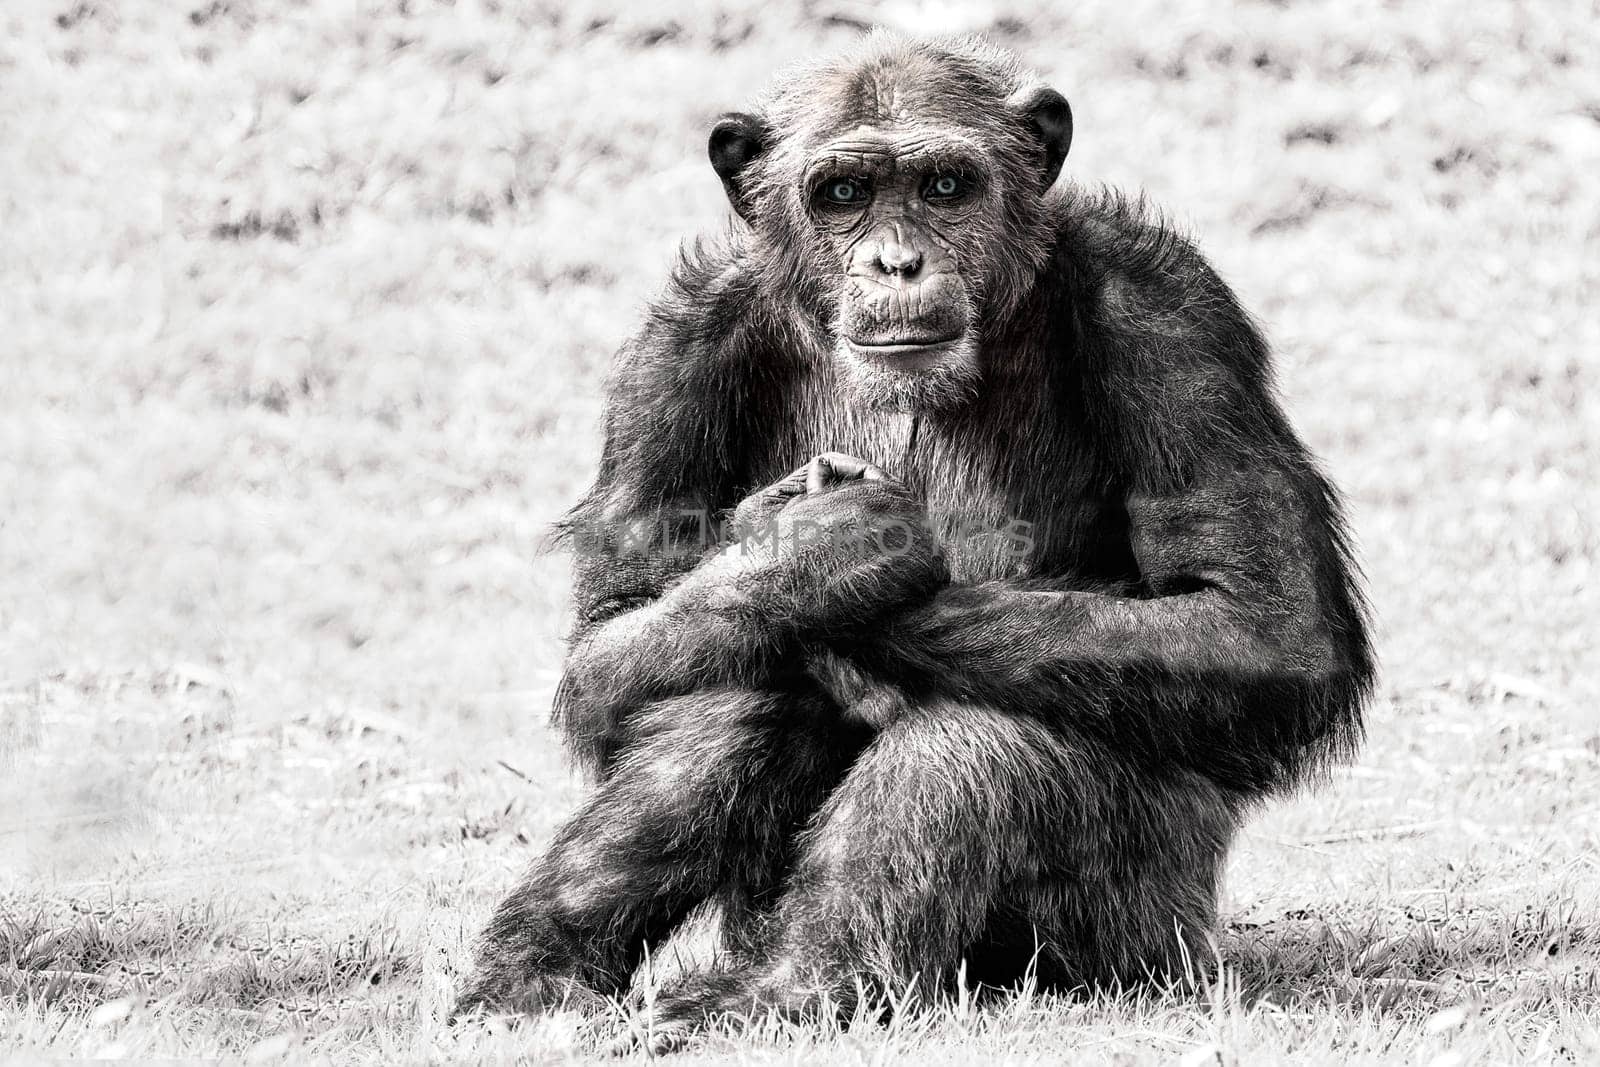 Ape chimpanzee monkey in b&w by AndreaIzzotti